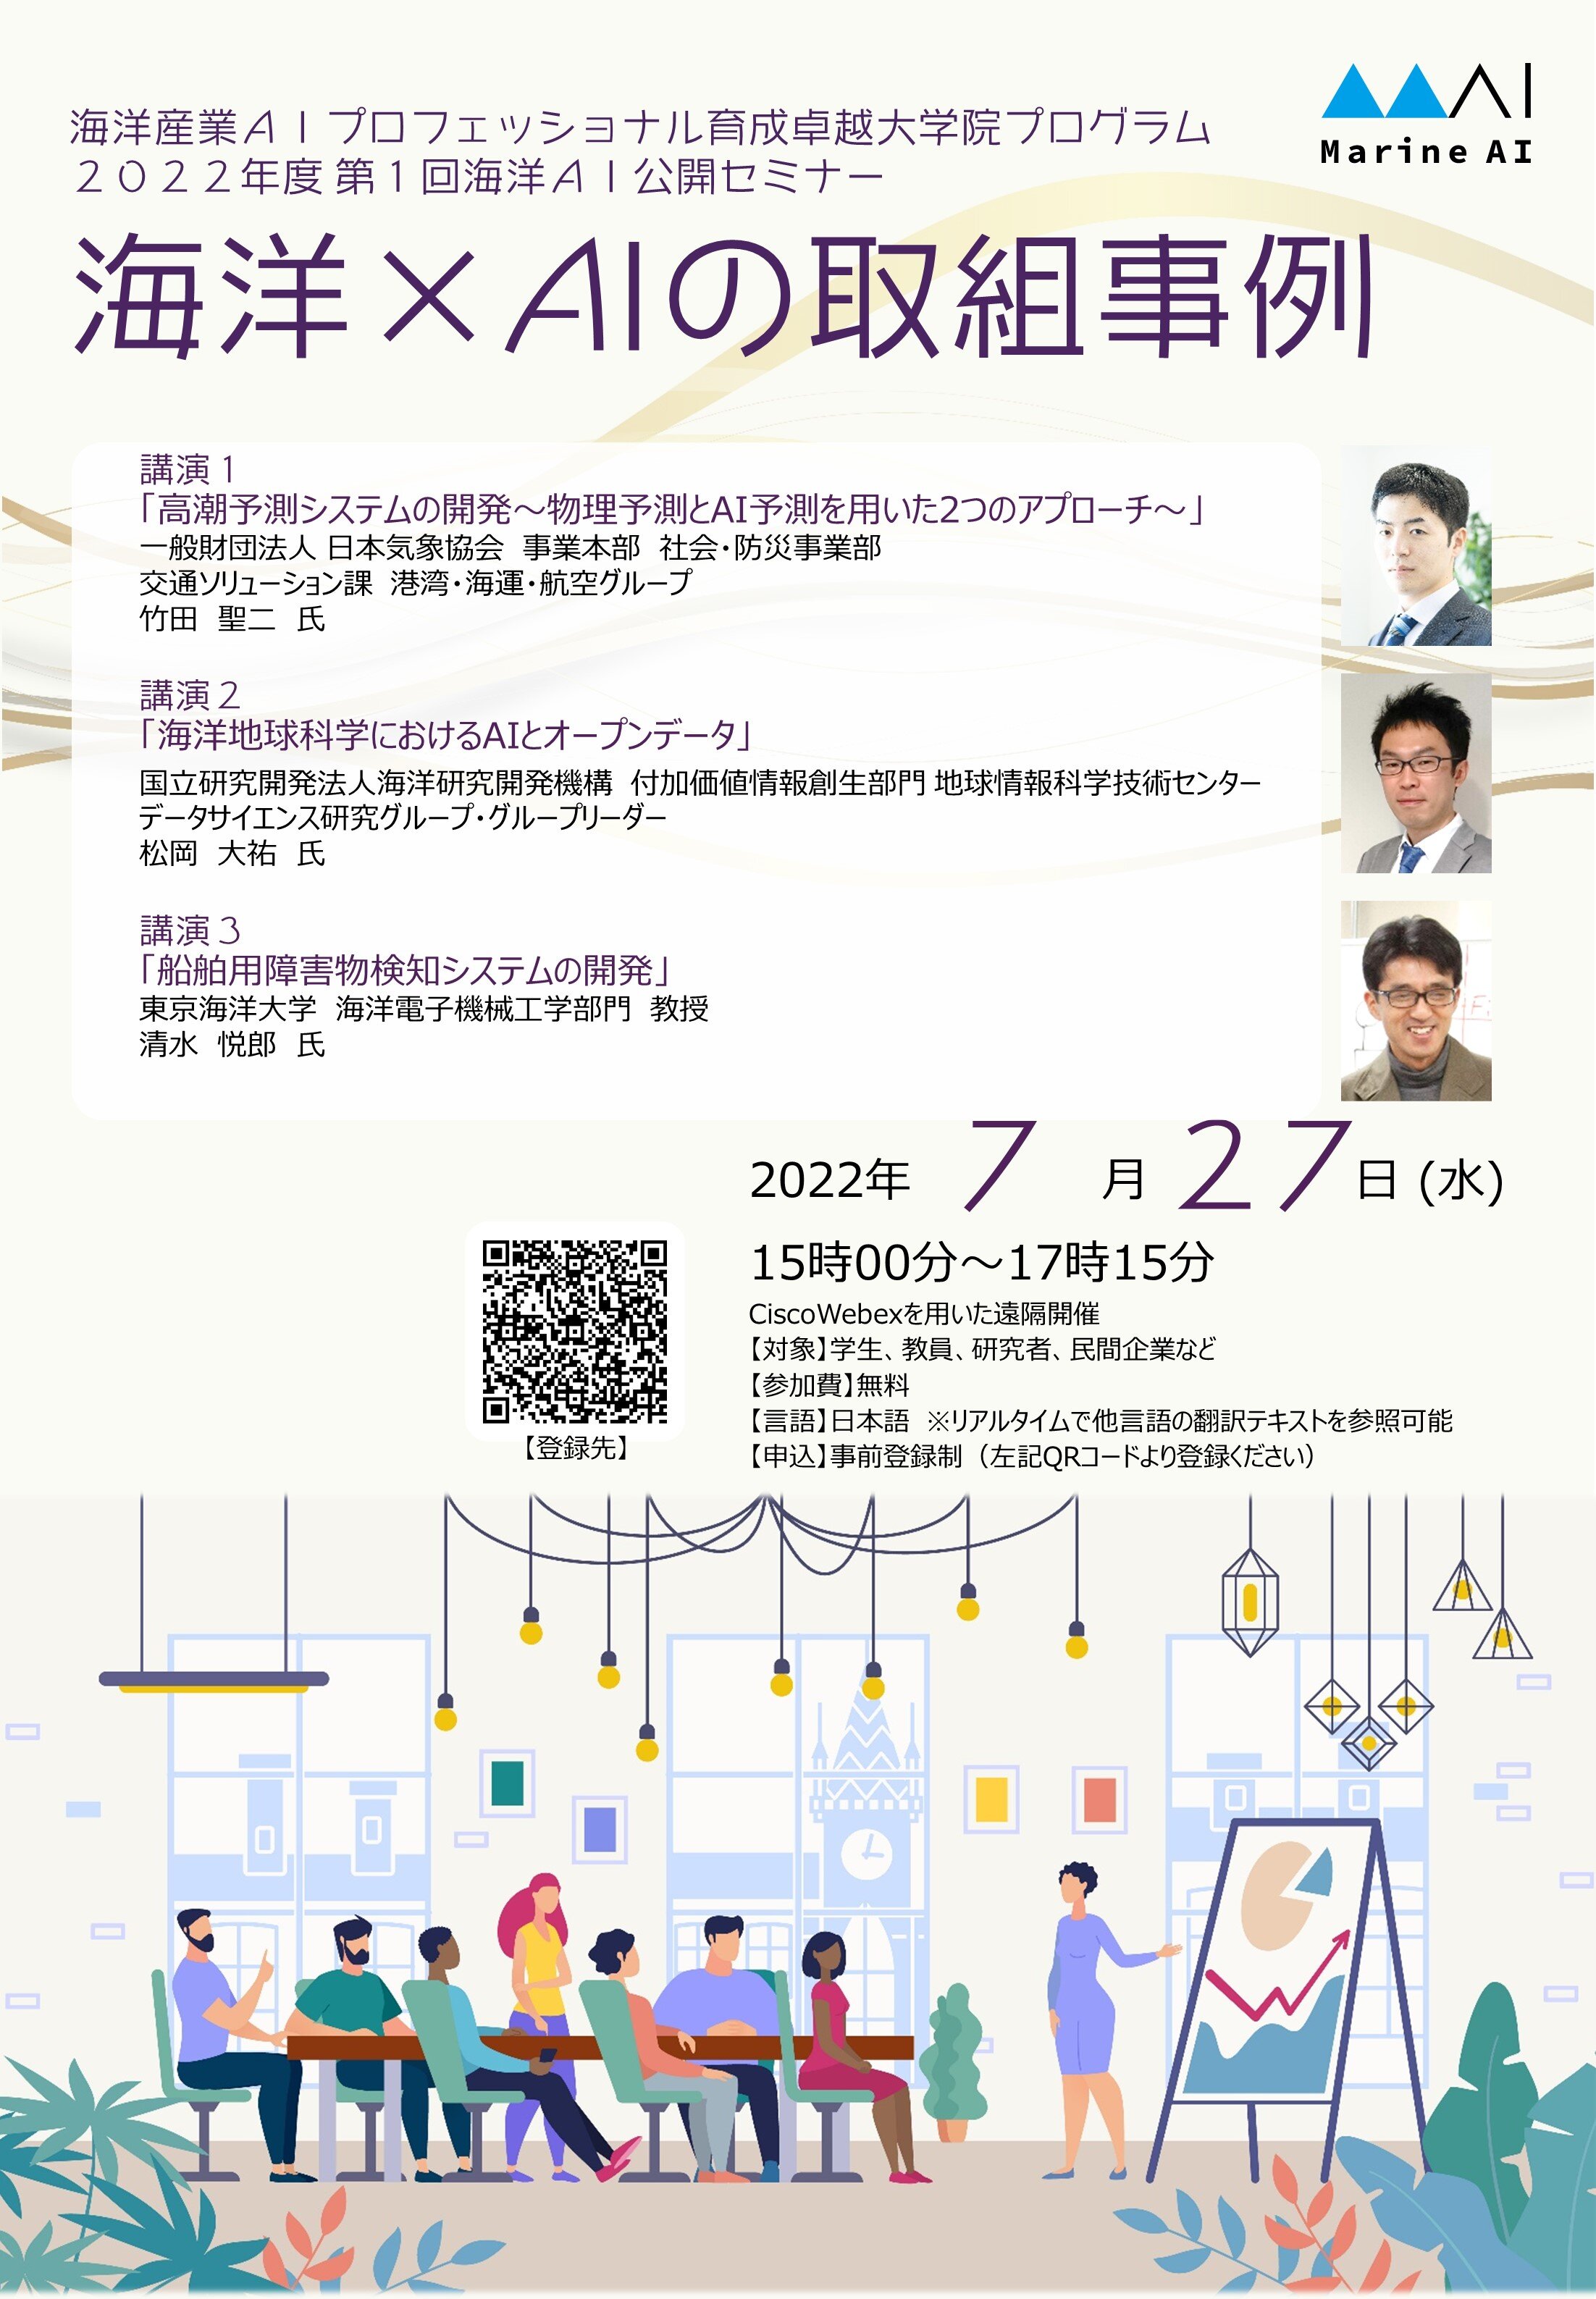 https://www.g2.kaiyodai.ac.jp/marine-ai/news/img/news/slide1.JPG